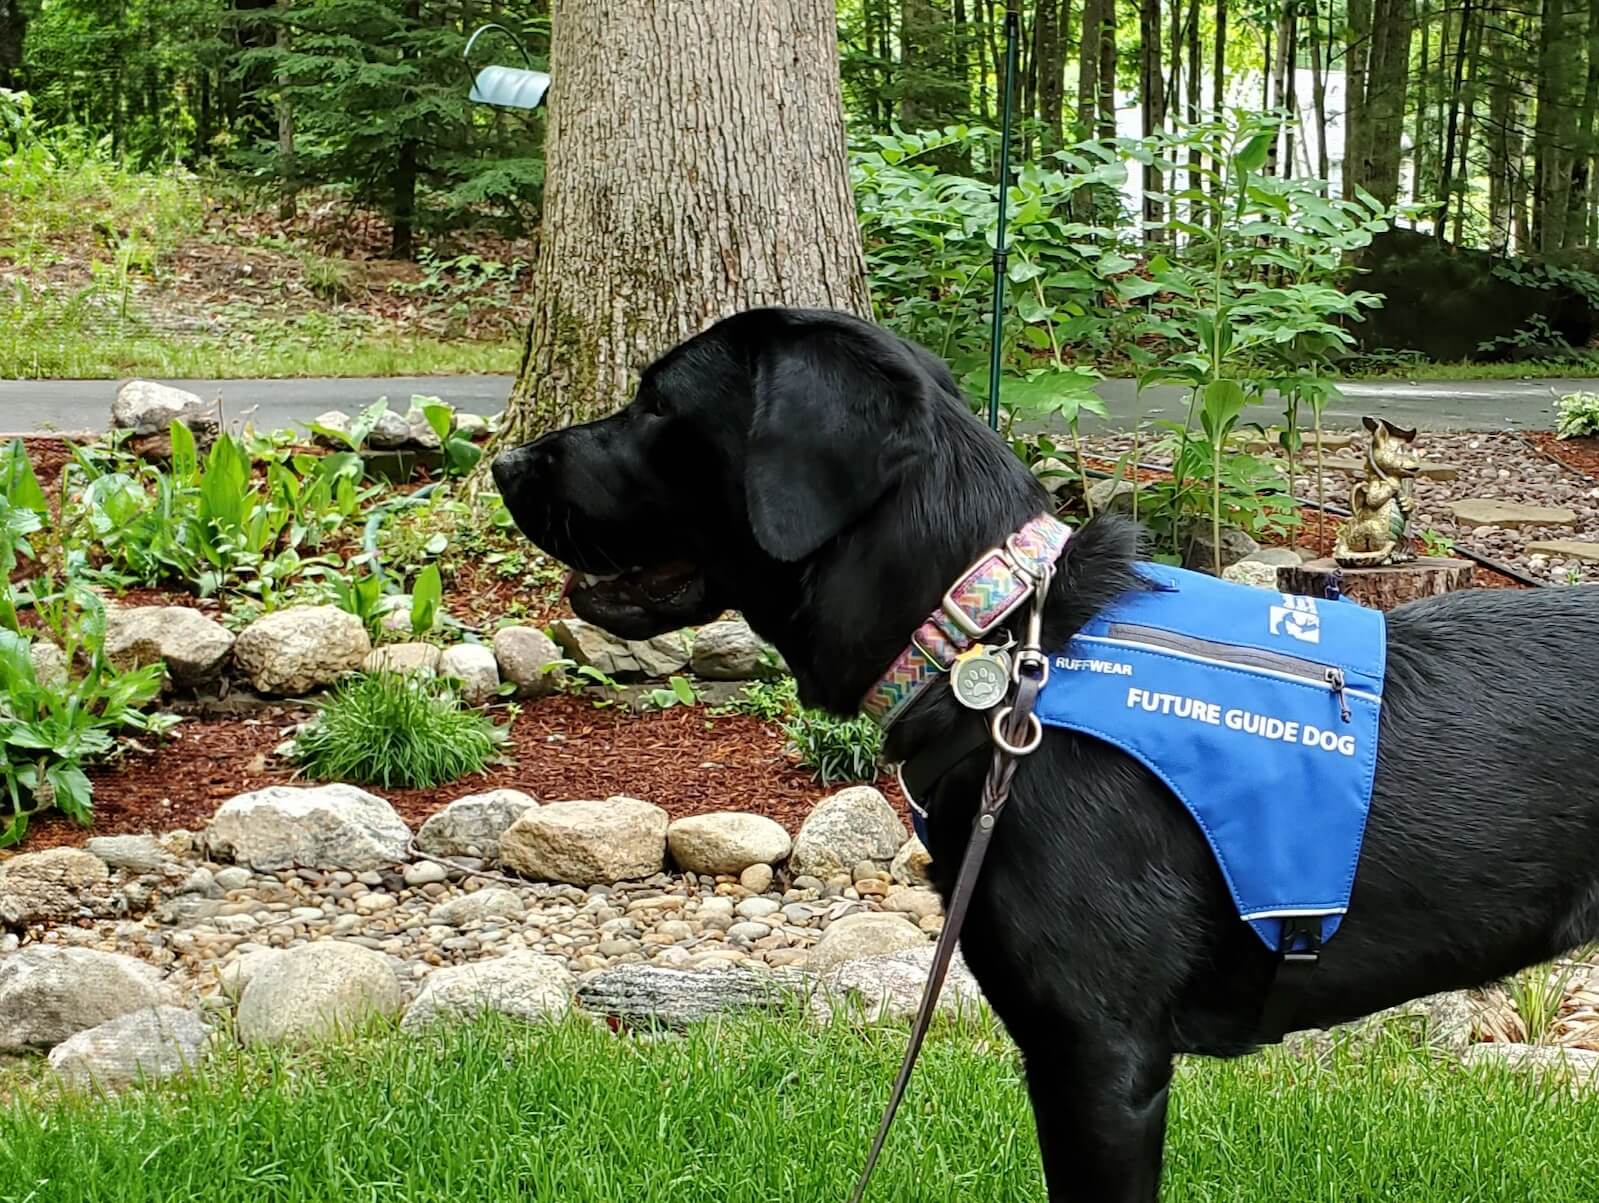 Black Lab in Future Guide Dog vest steps into photo in garden area